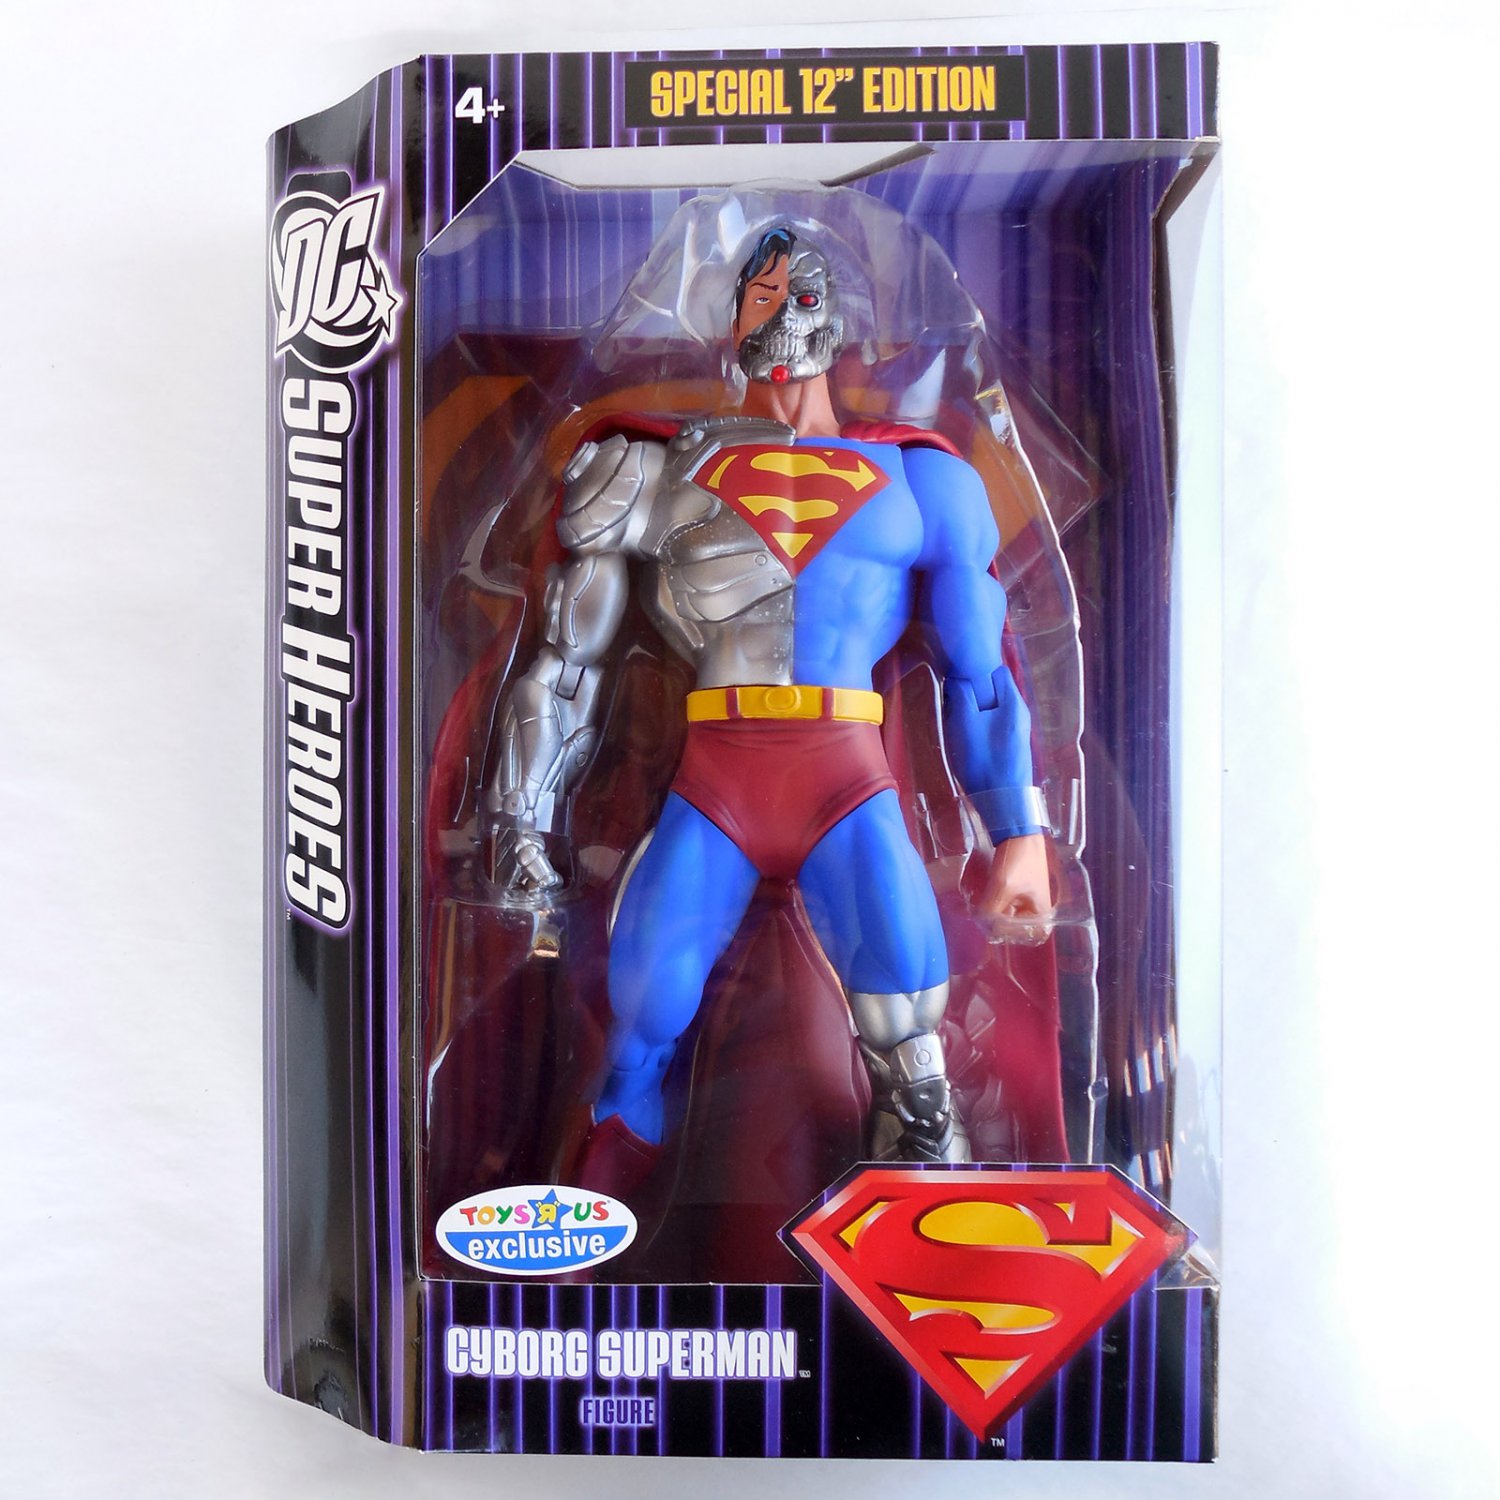 DC SuperHeroes Cyborg Superman Special 12" Edition Action Figure